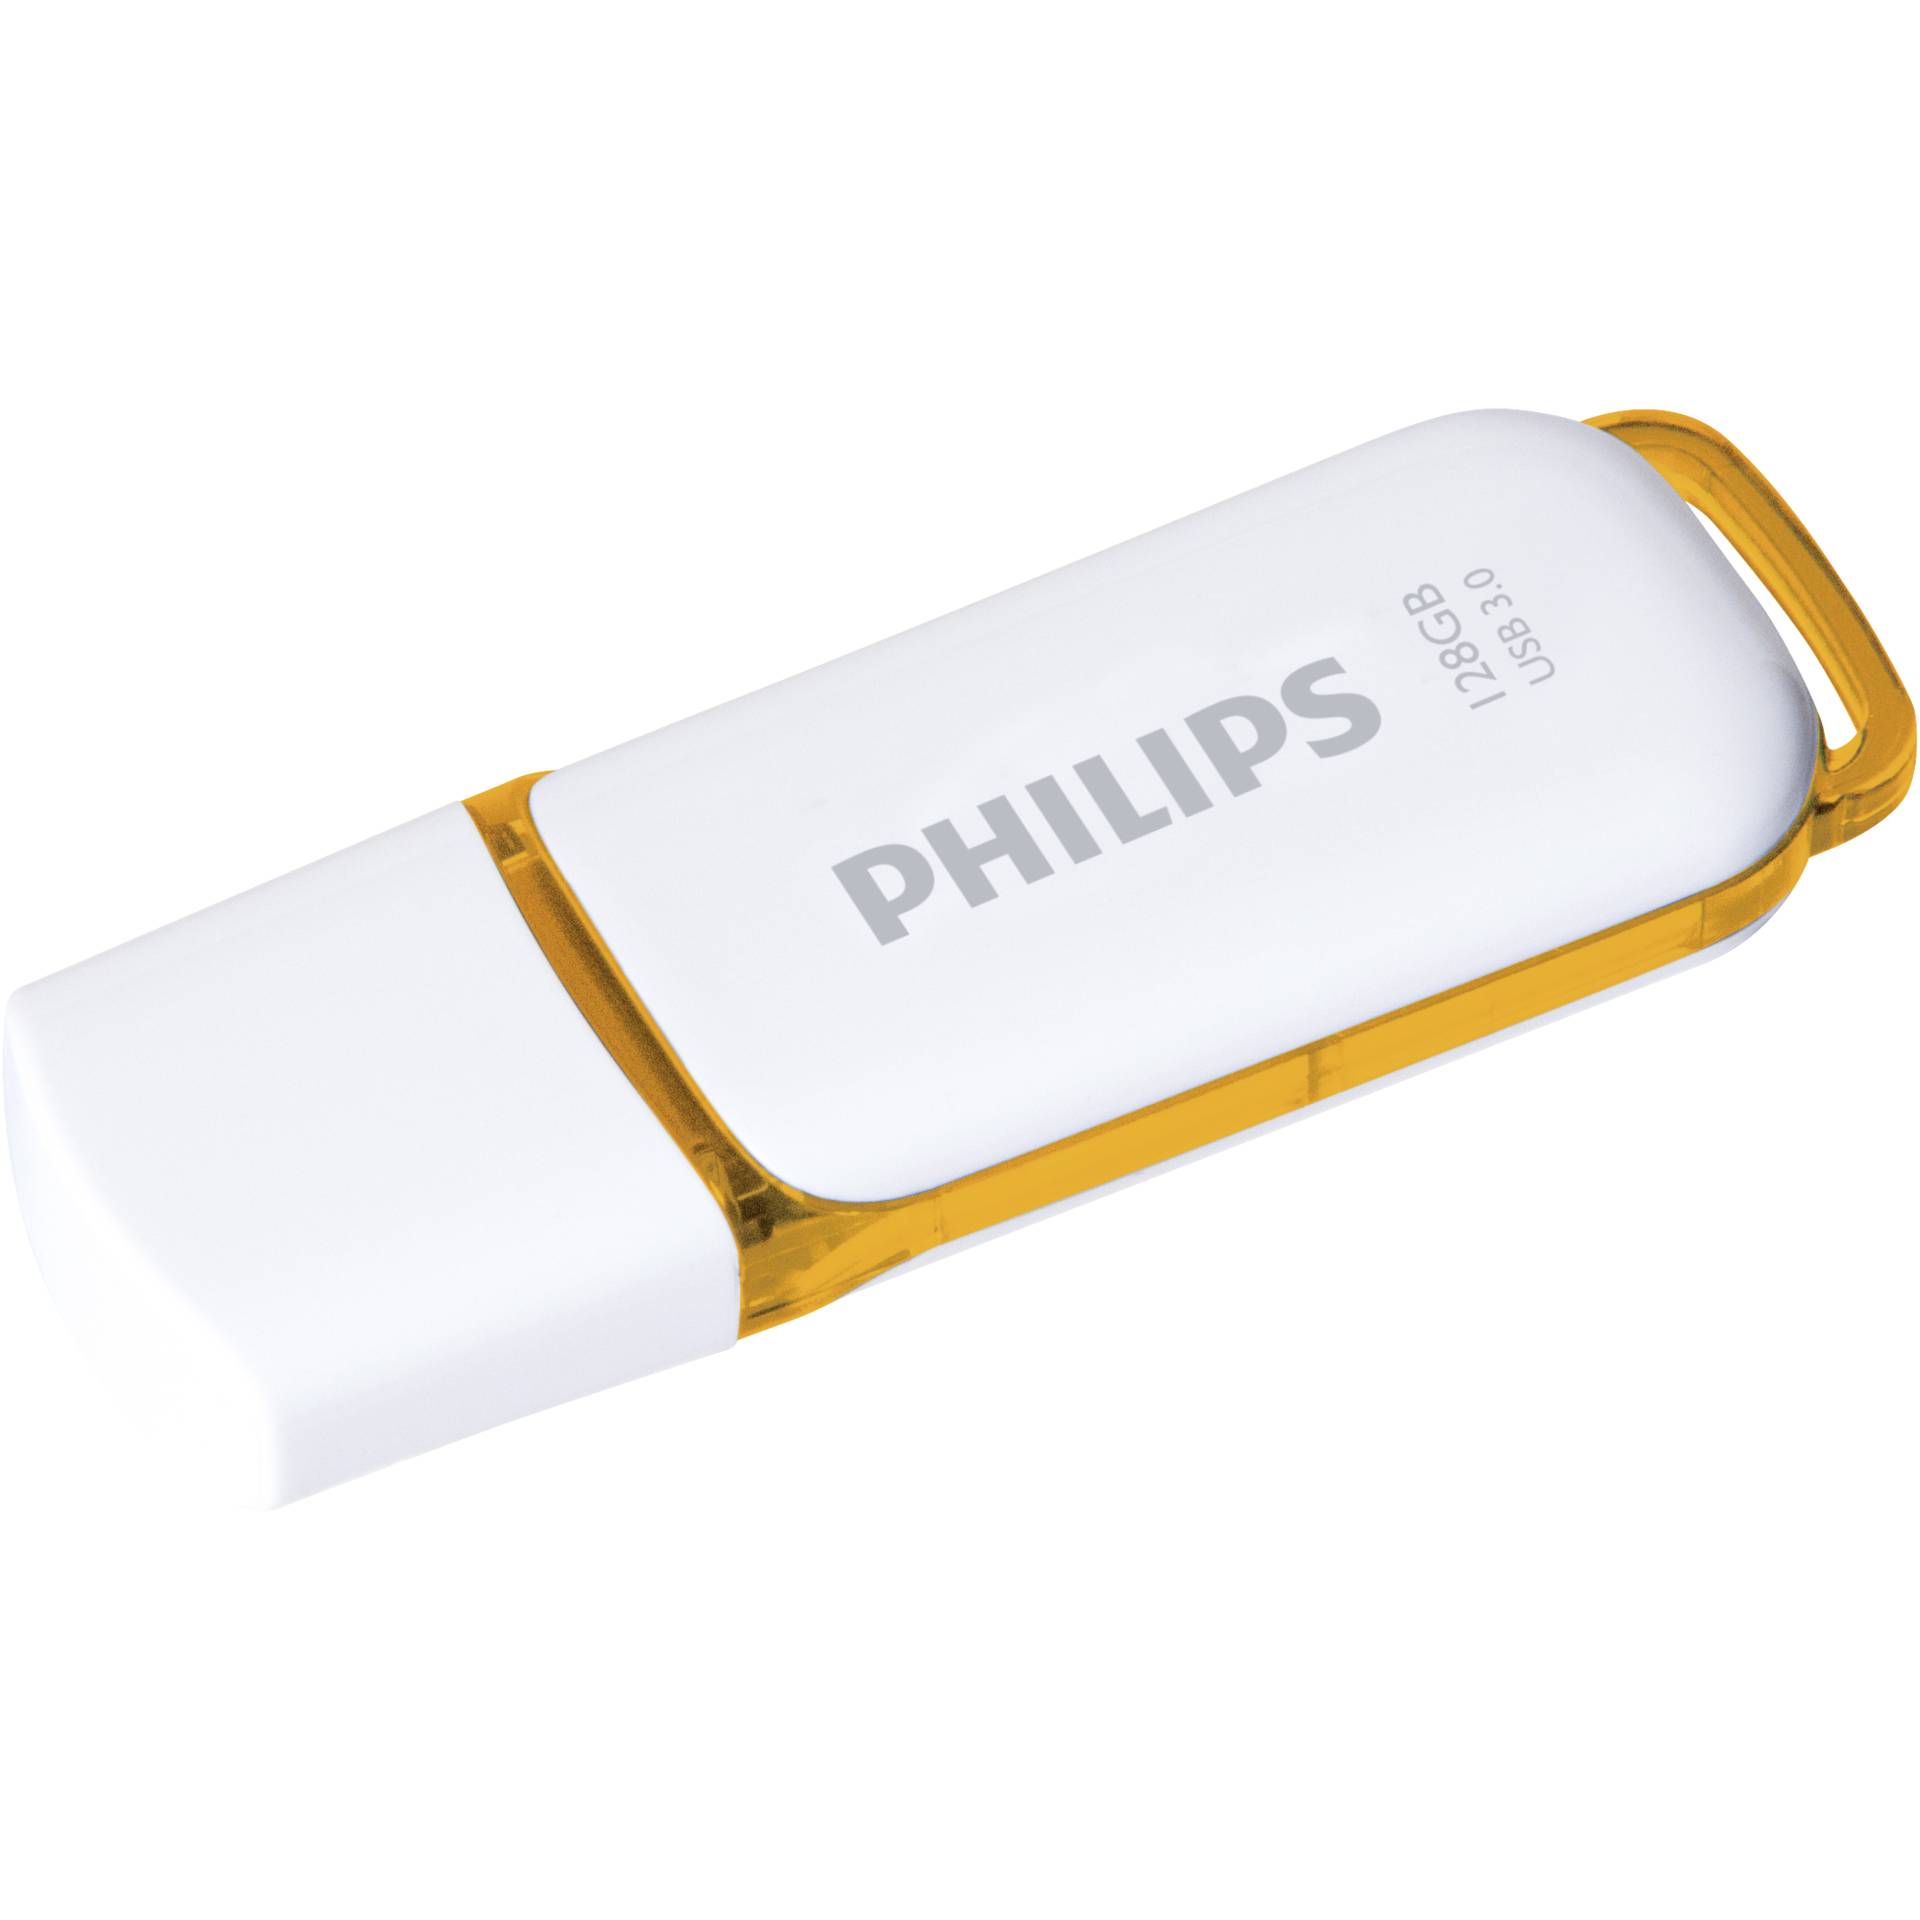 Philips USB 3.0            128GB Snow Edition arancio